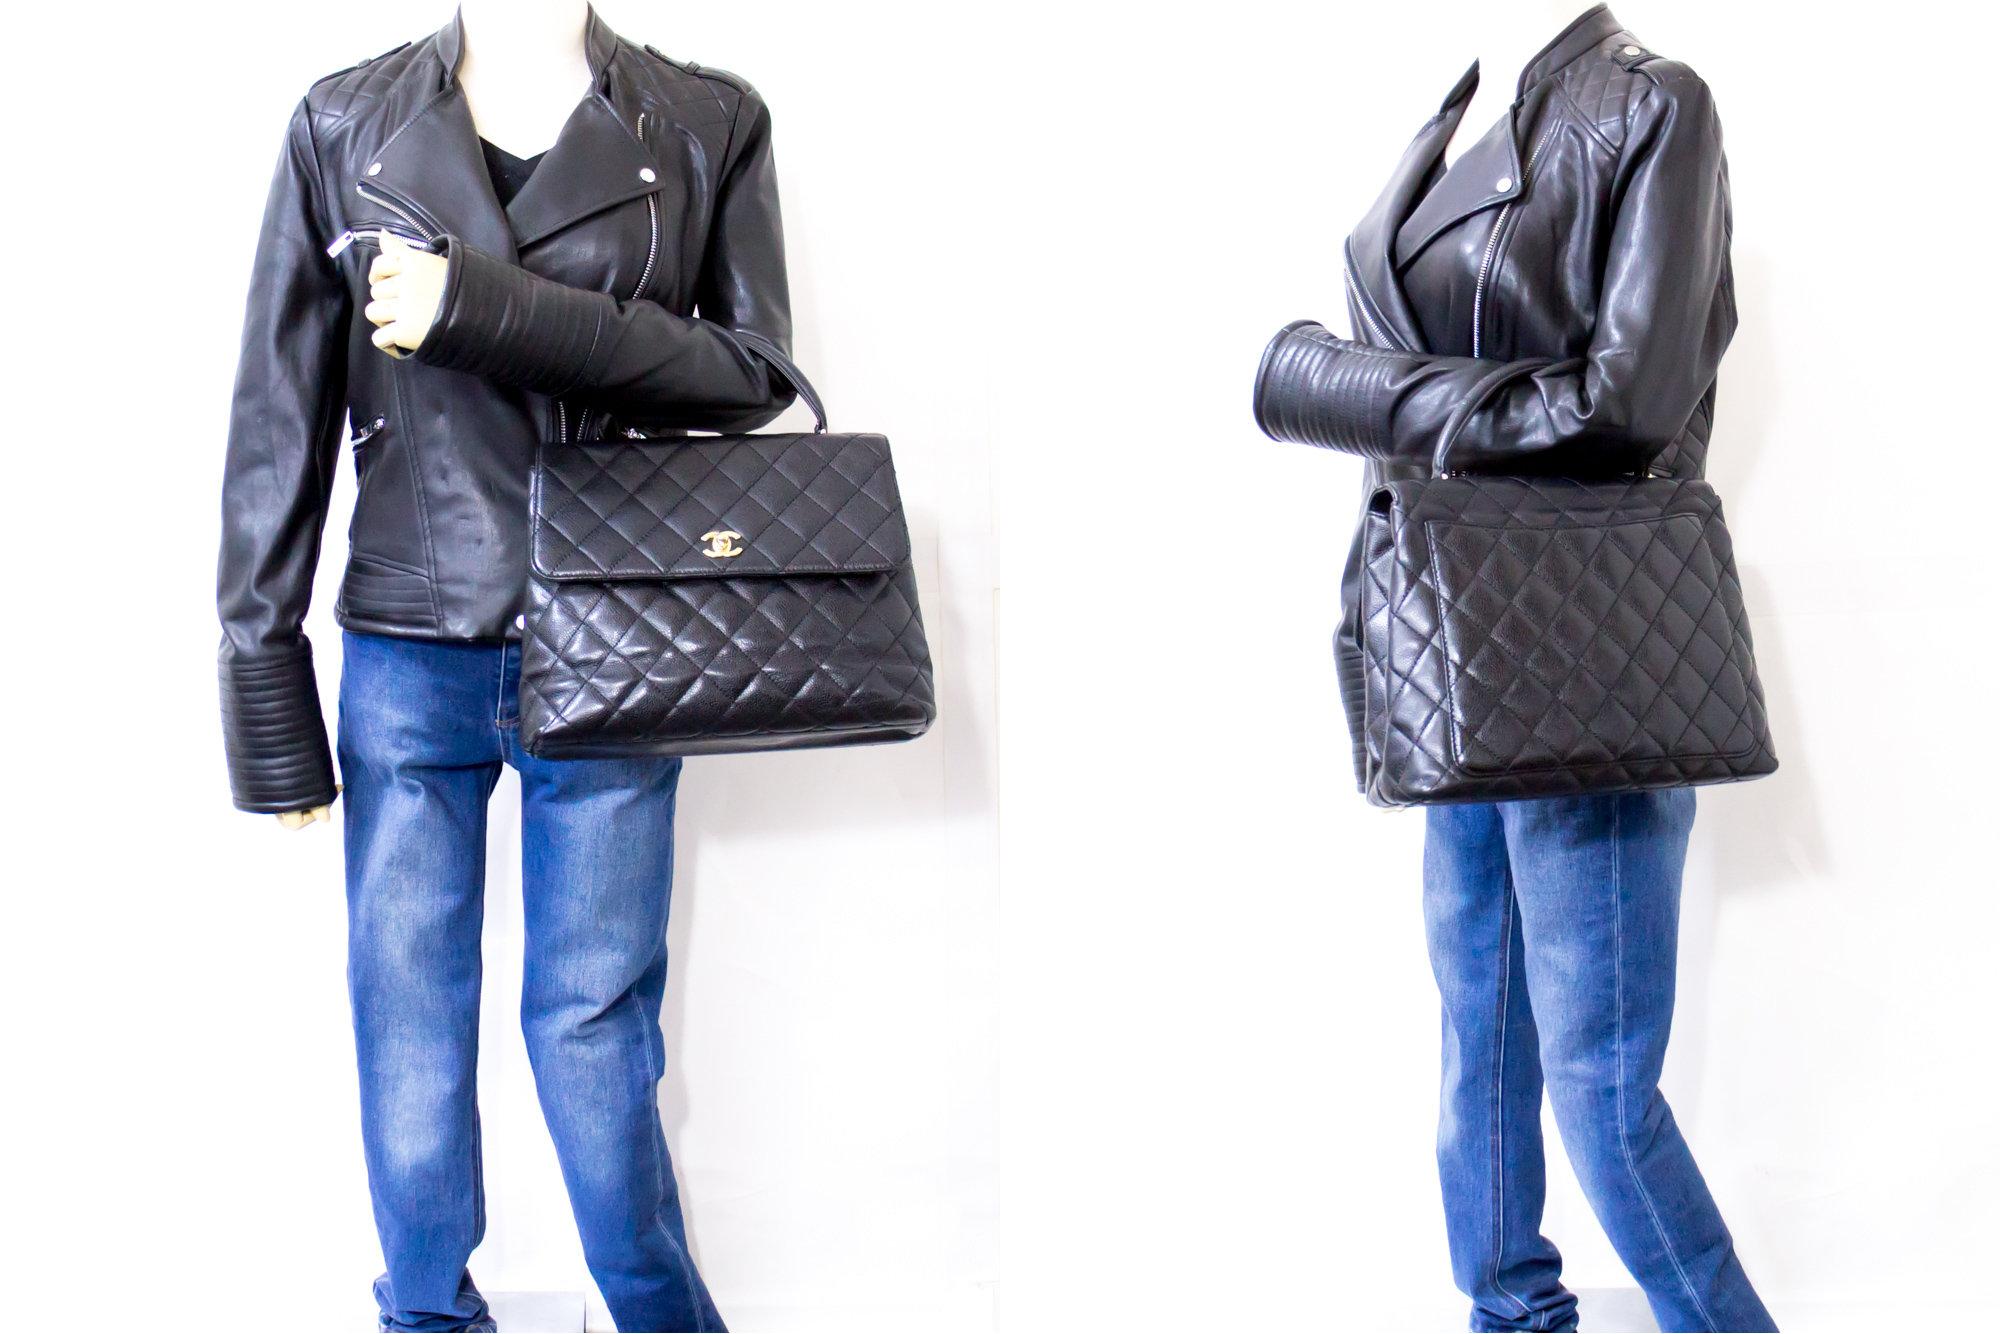 CHANEL Kelly Caviar Handbag Bag Black Flap Leather Gold Hardware 5